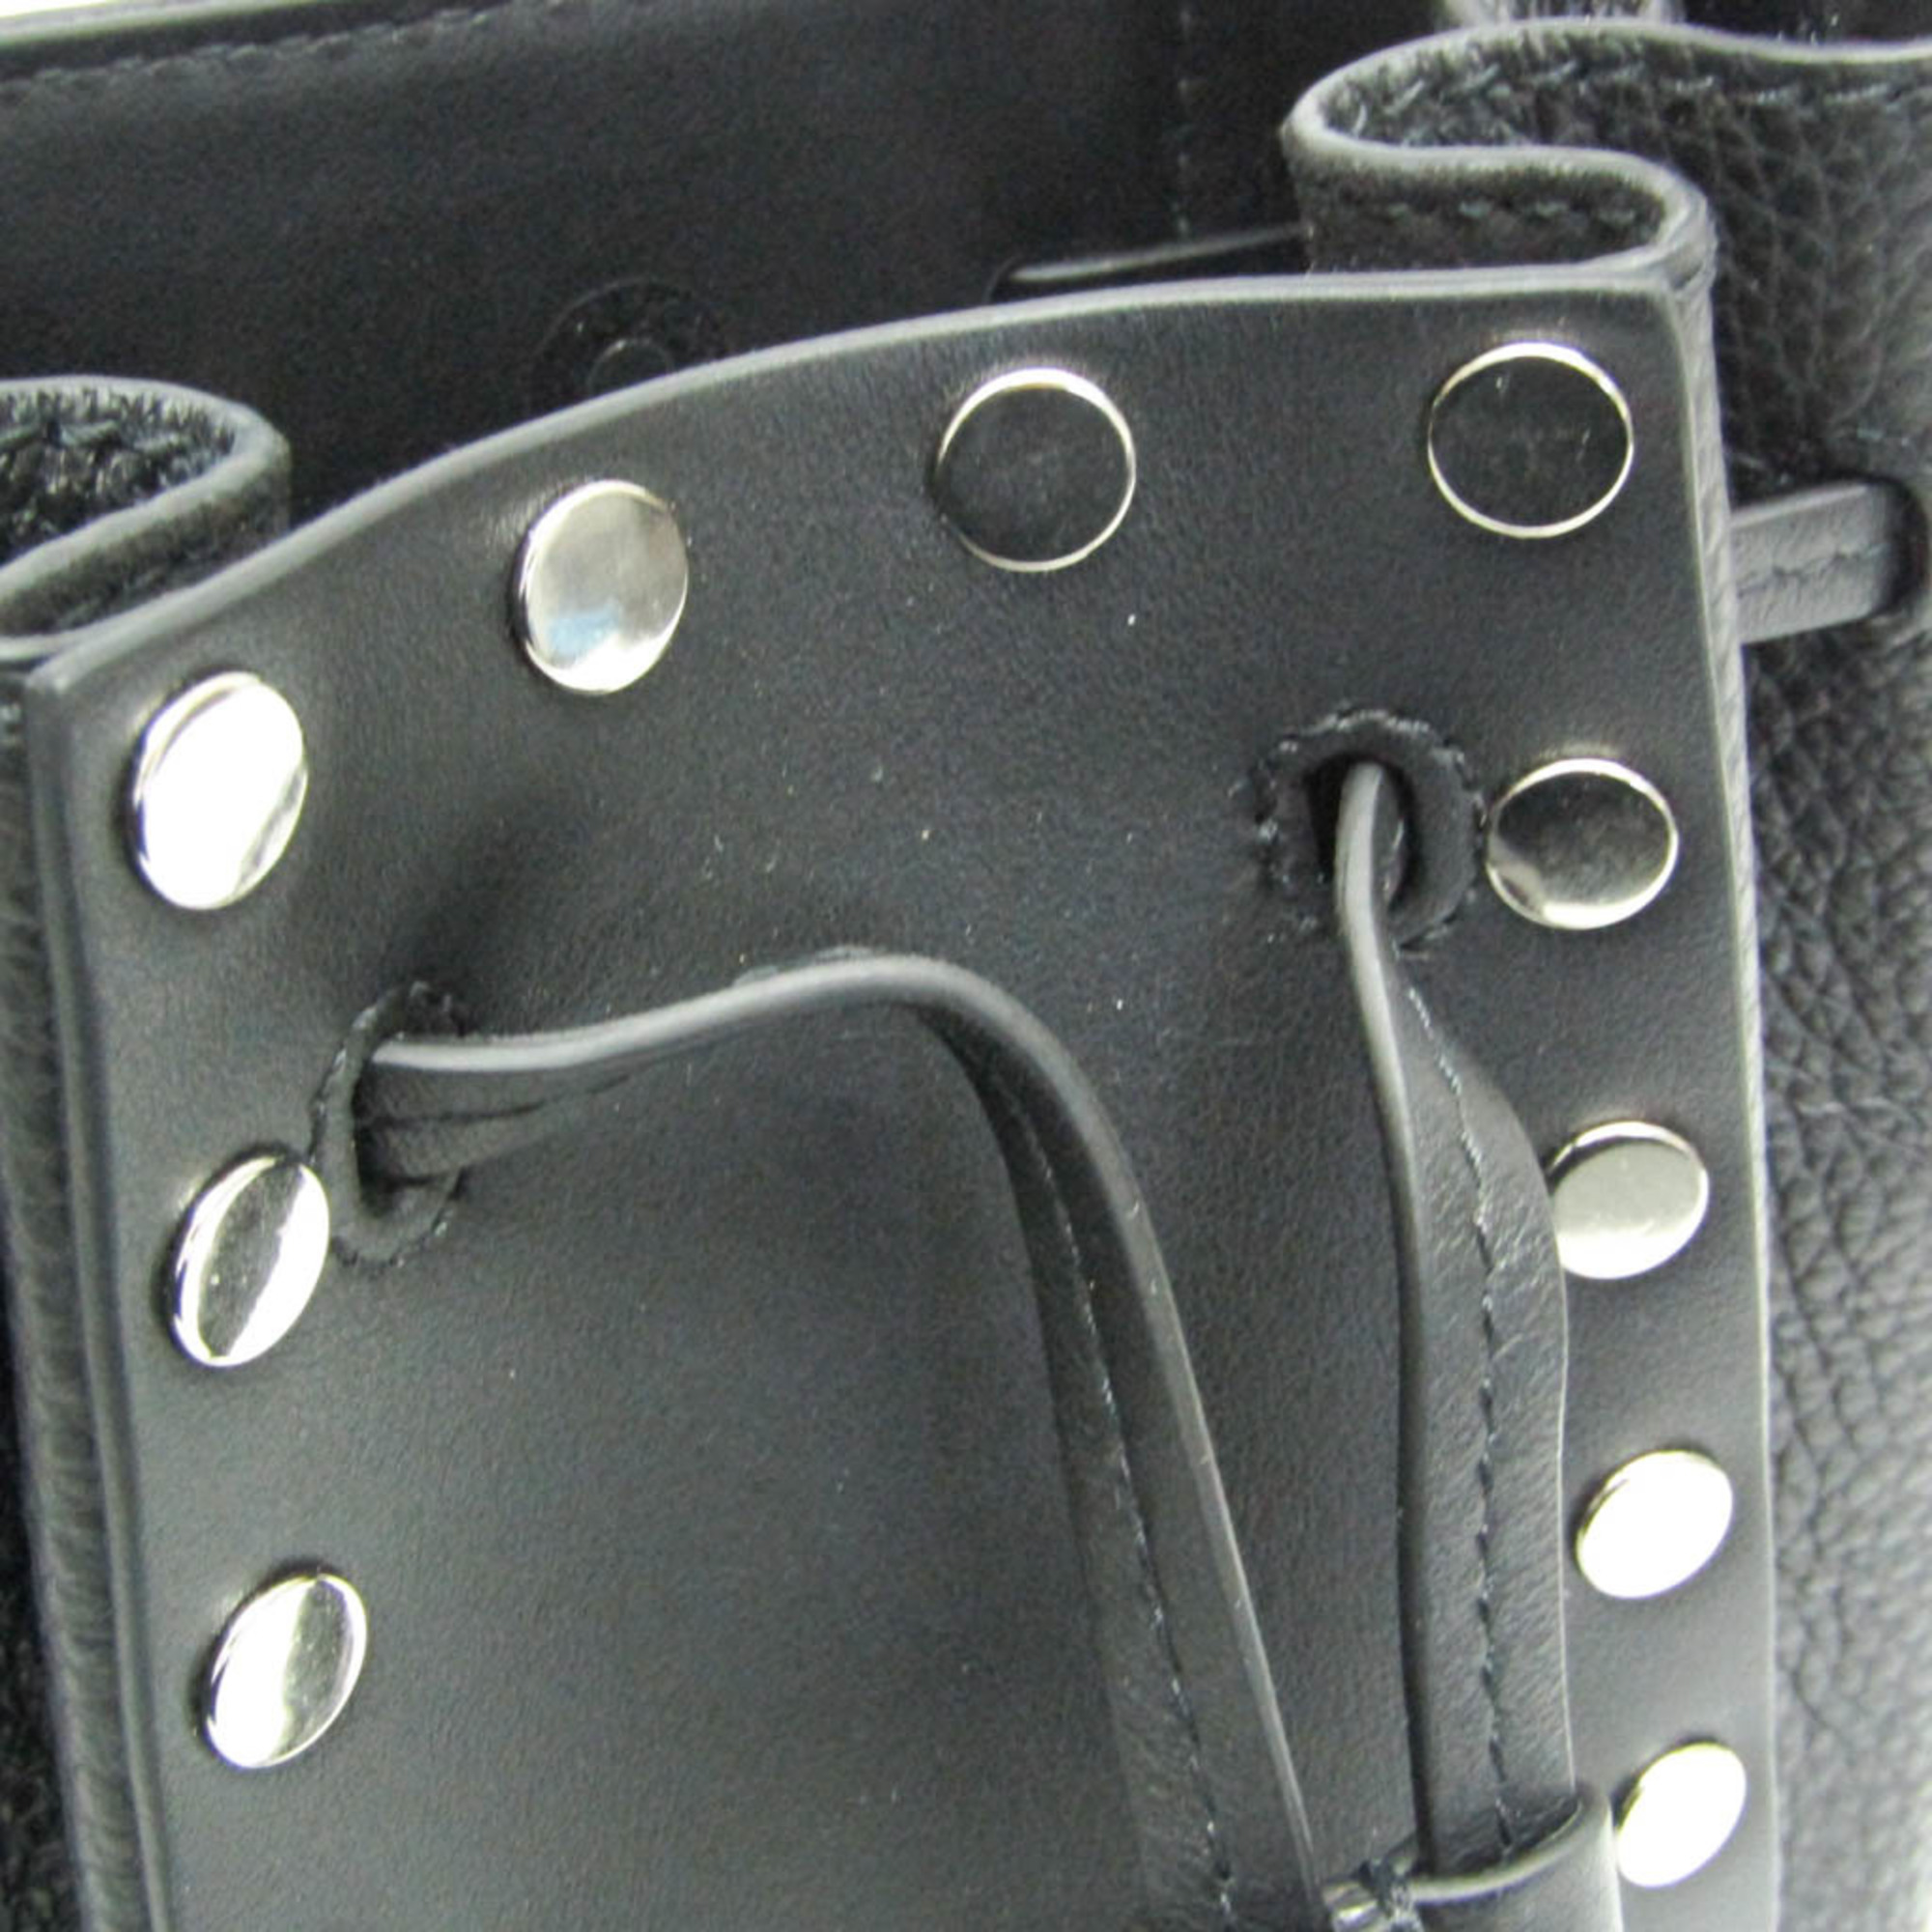 Furla Myastella WB00592 Women's Leather Handbag,Shoulder Bag Black